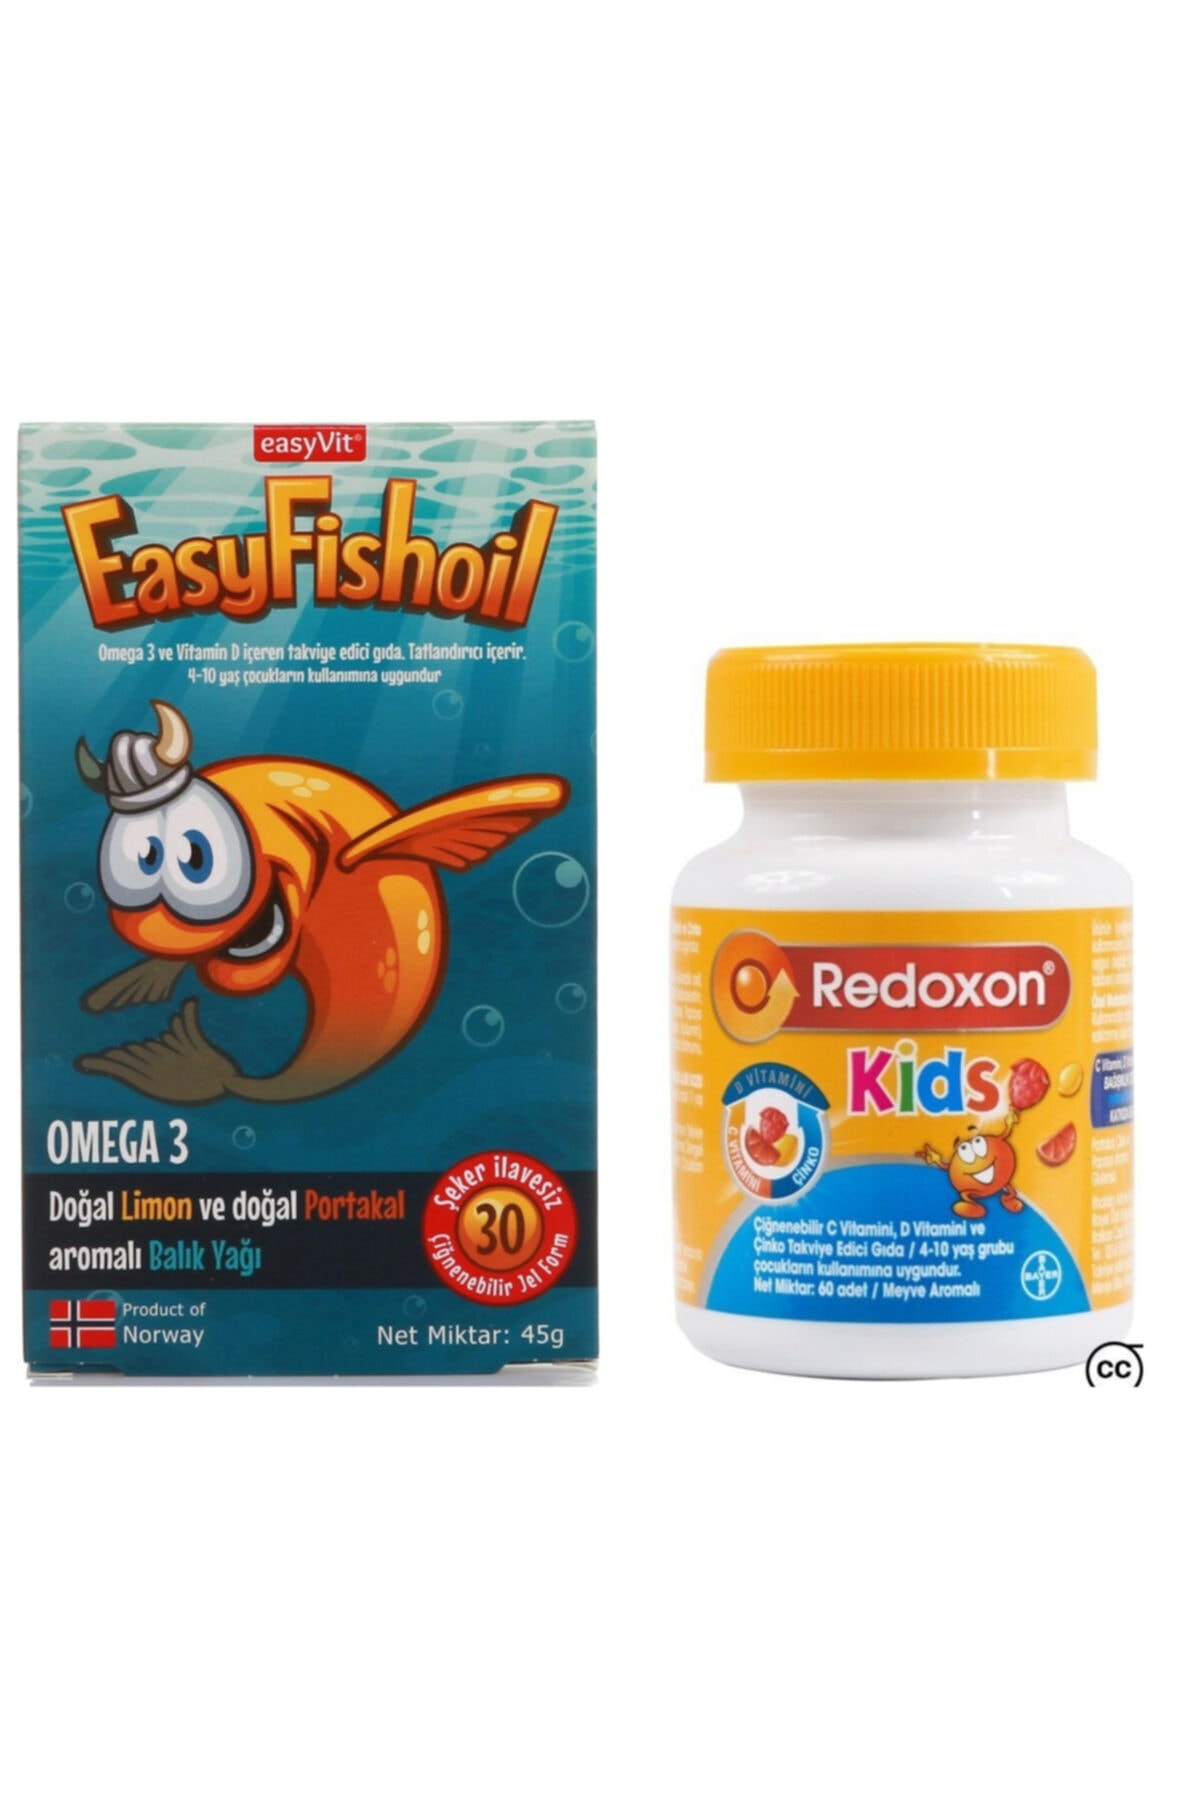 Easy Fishoil Easy Fish Oil Omega 3 Balık Yağı30 Jel Tablet + Redoxon Kids Çiğnenebilir 60 Tablet 2'li Paket